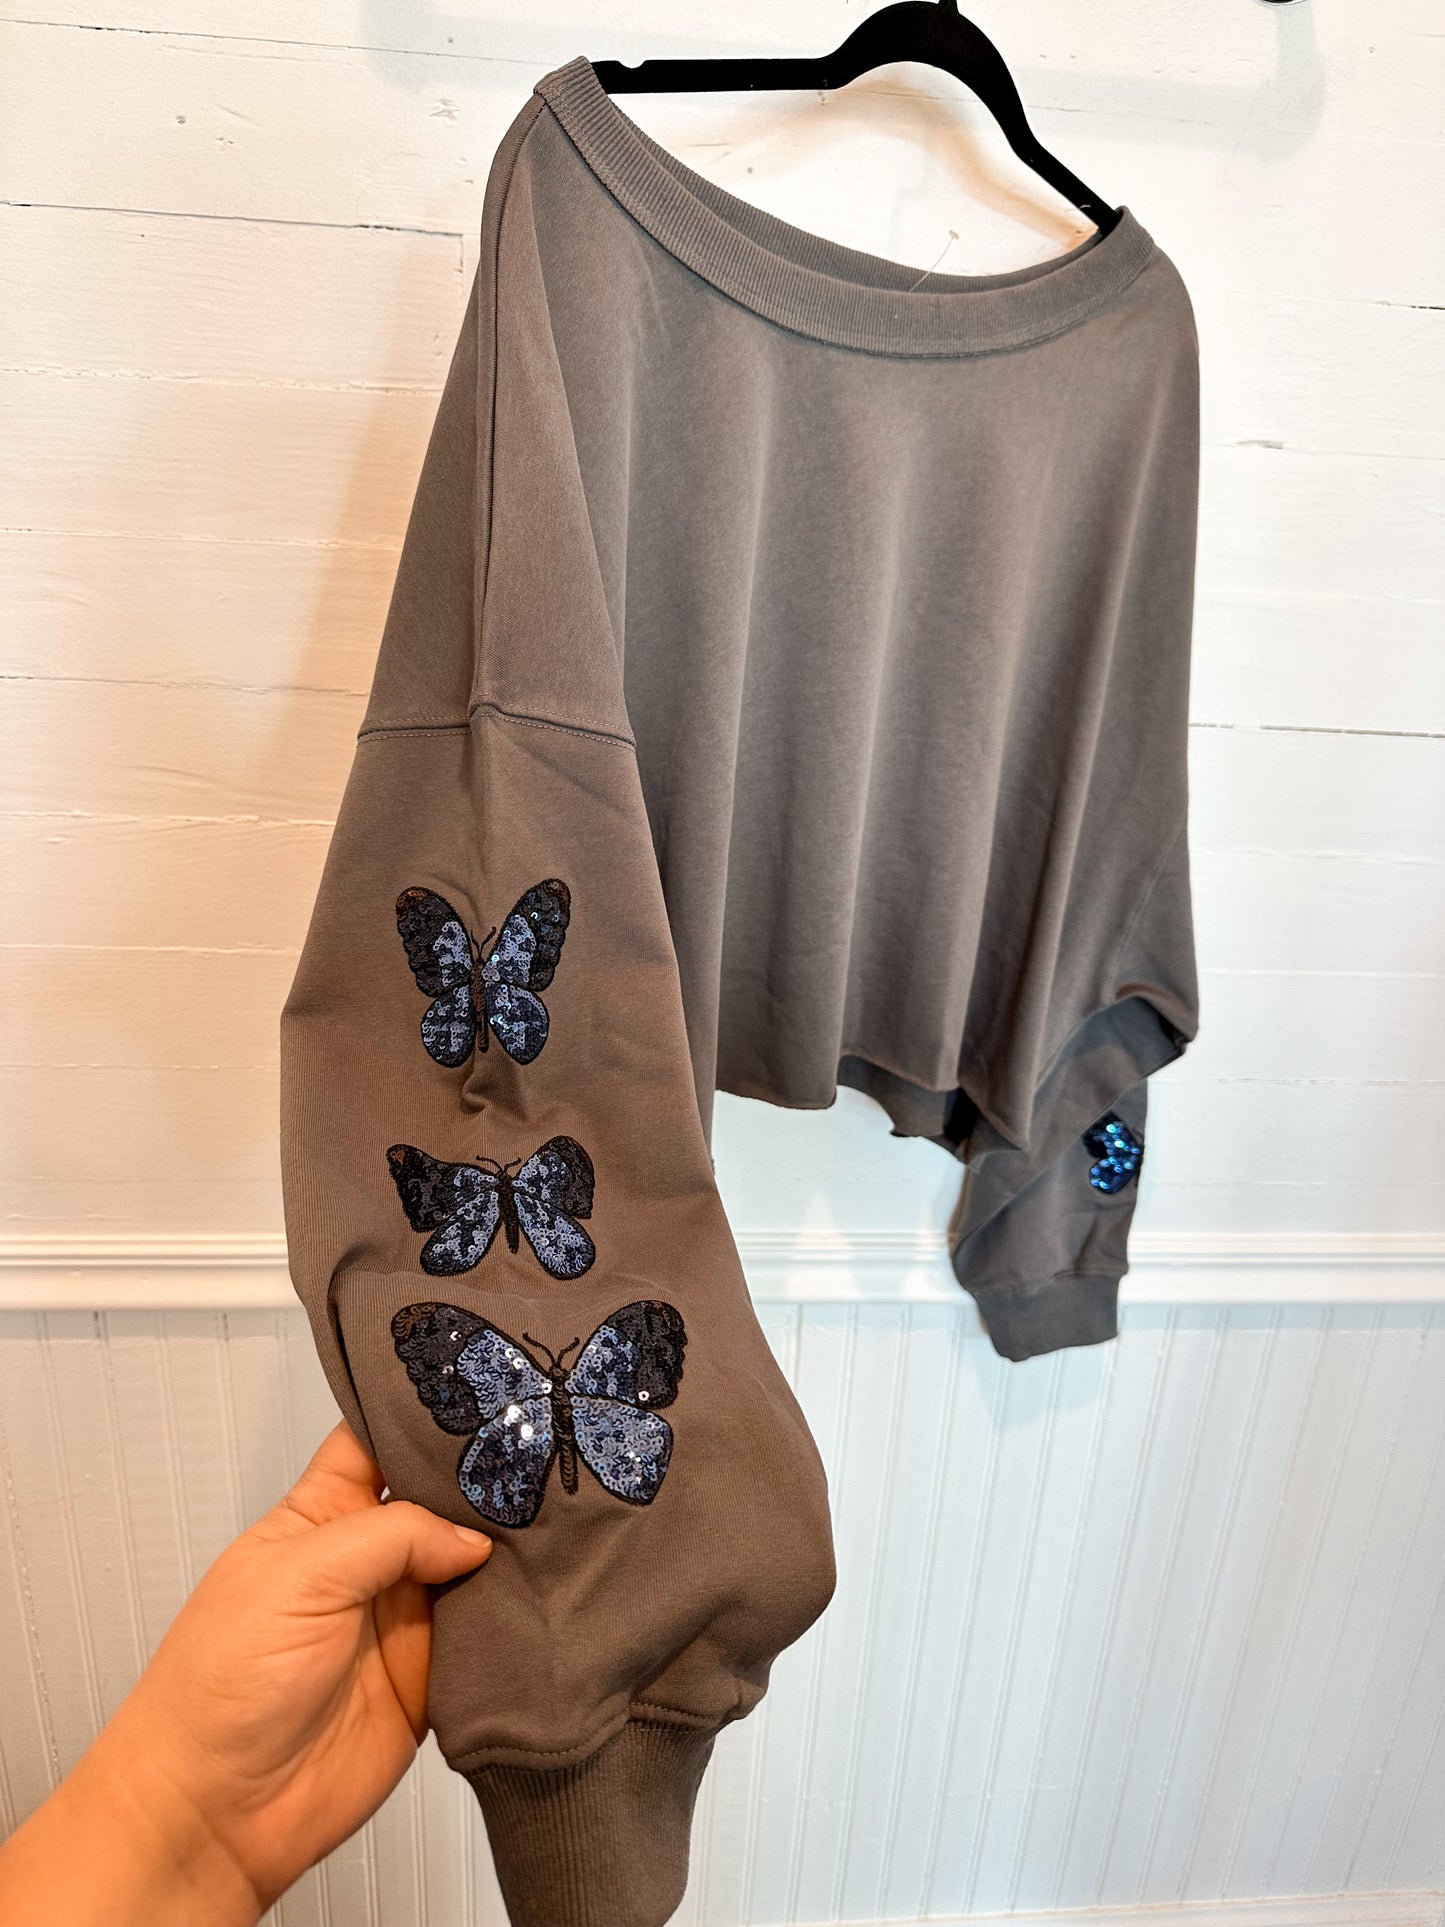 Butterfly Sleeve Top